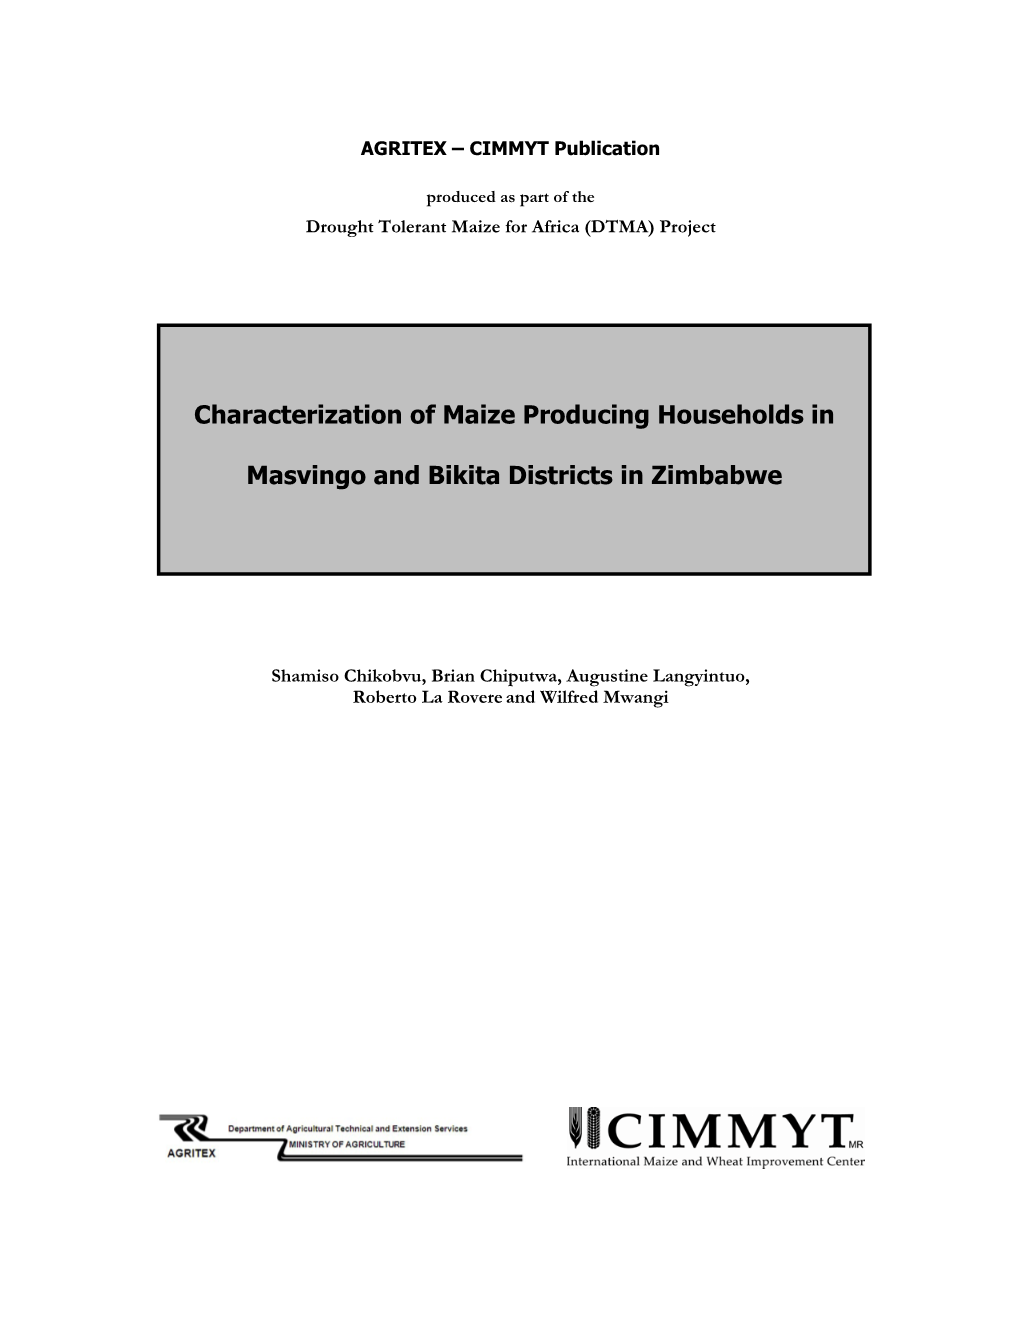 Characterization of Maize Producing Households in Masvingo and Bikita Districts in Zimbabwe